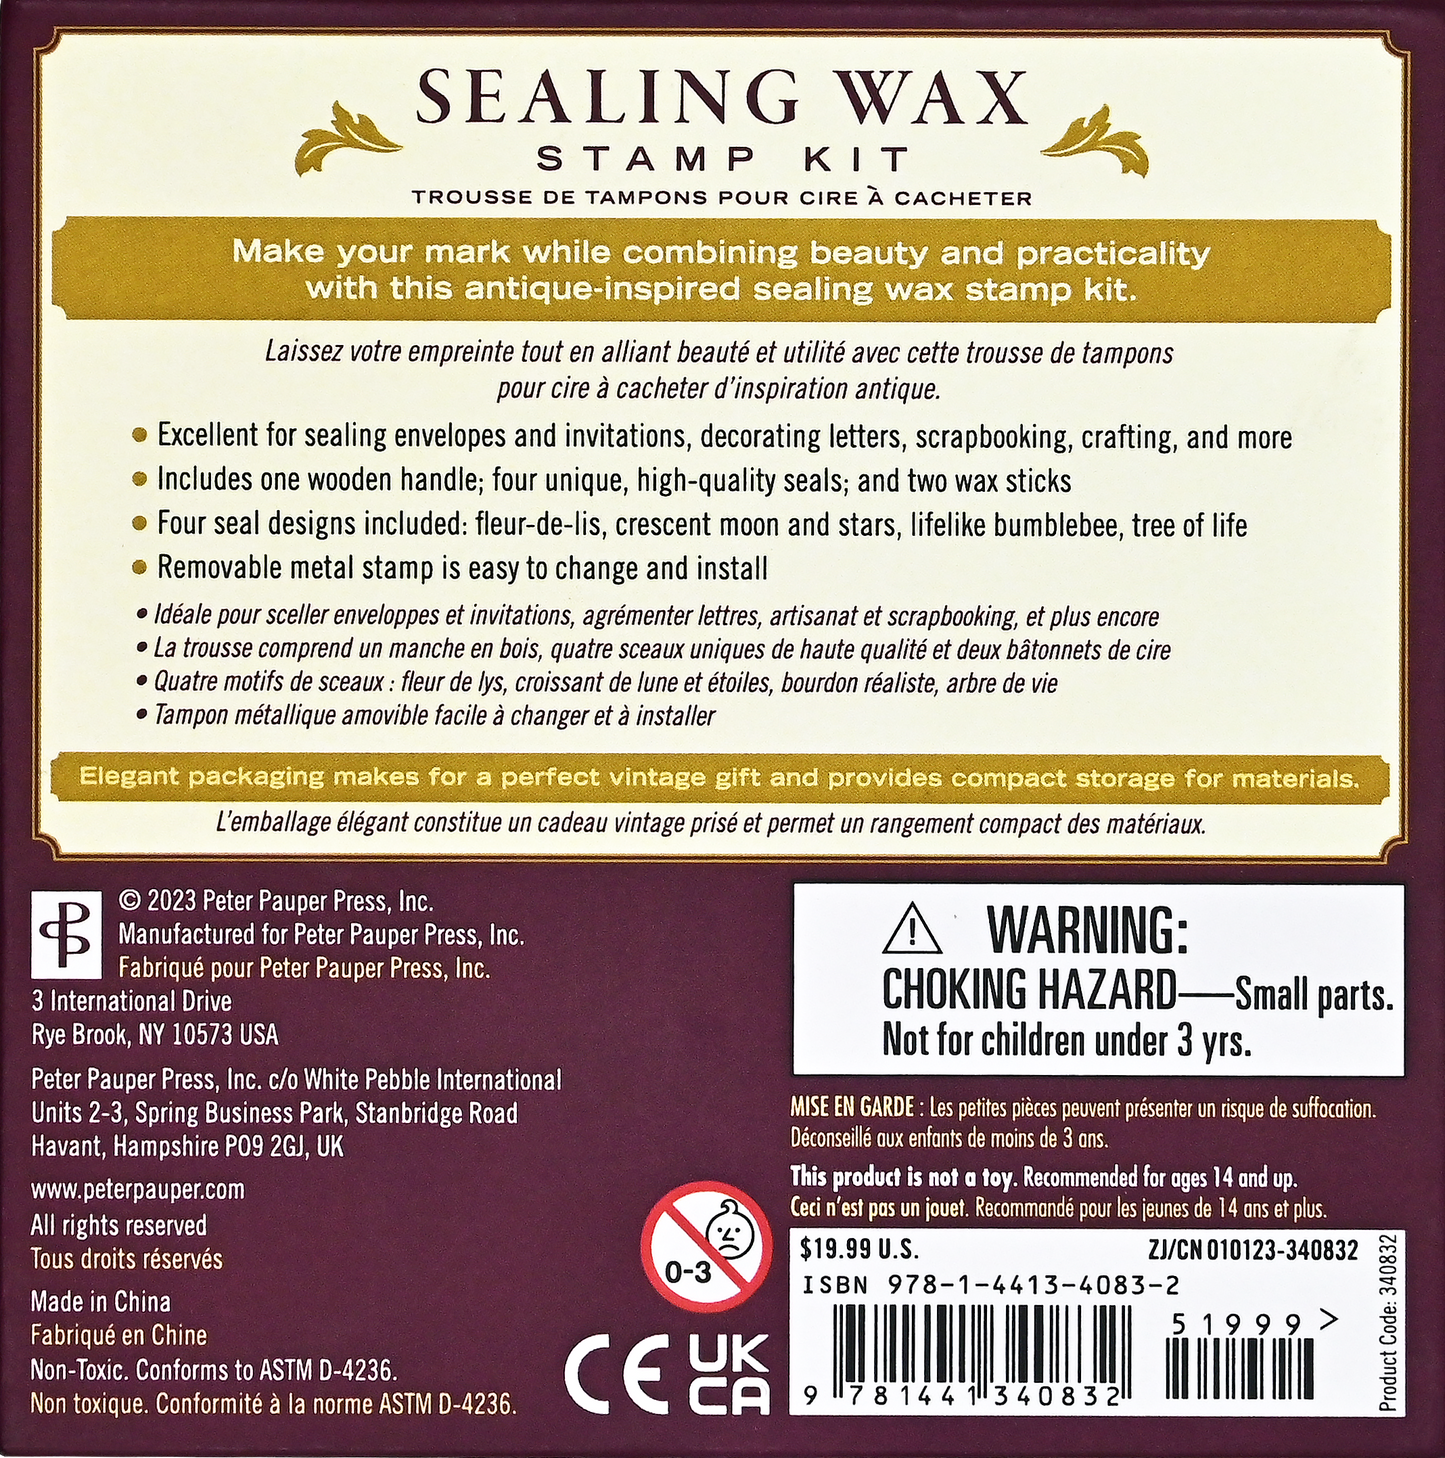 Peter Pauper Press - Sealing Wax Stamp Kit